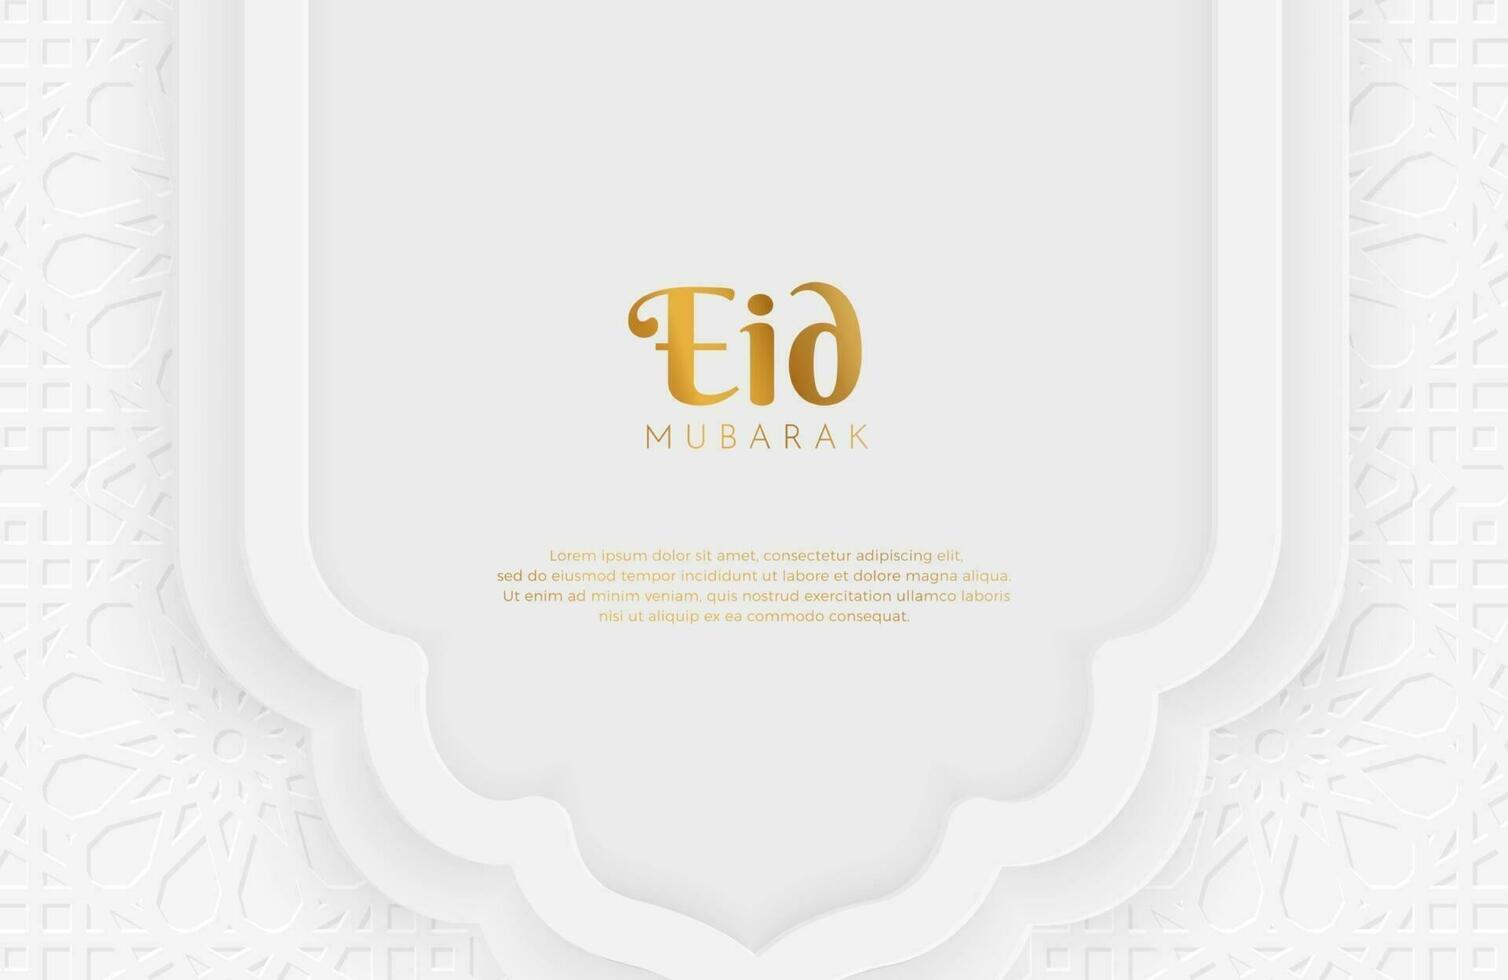 Eid mubarak background with white paper cut geometric shape Vector illustration for Islamic holy month celebrations